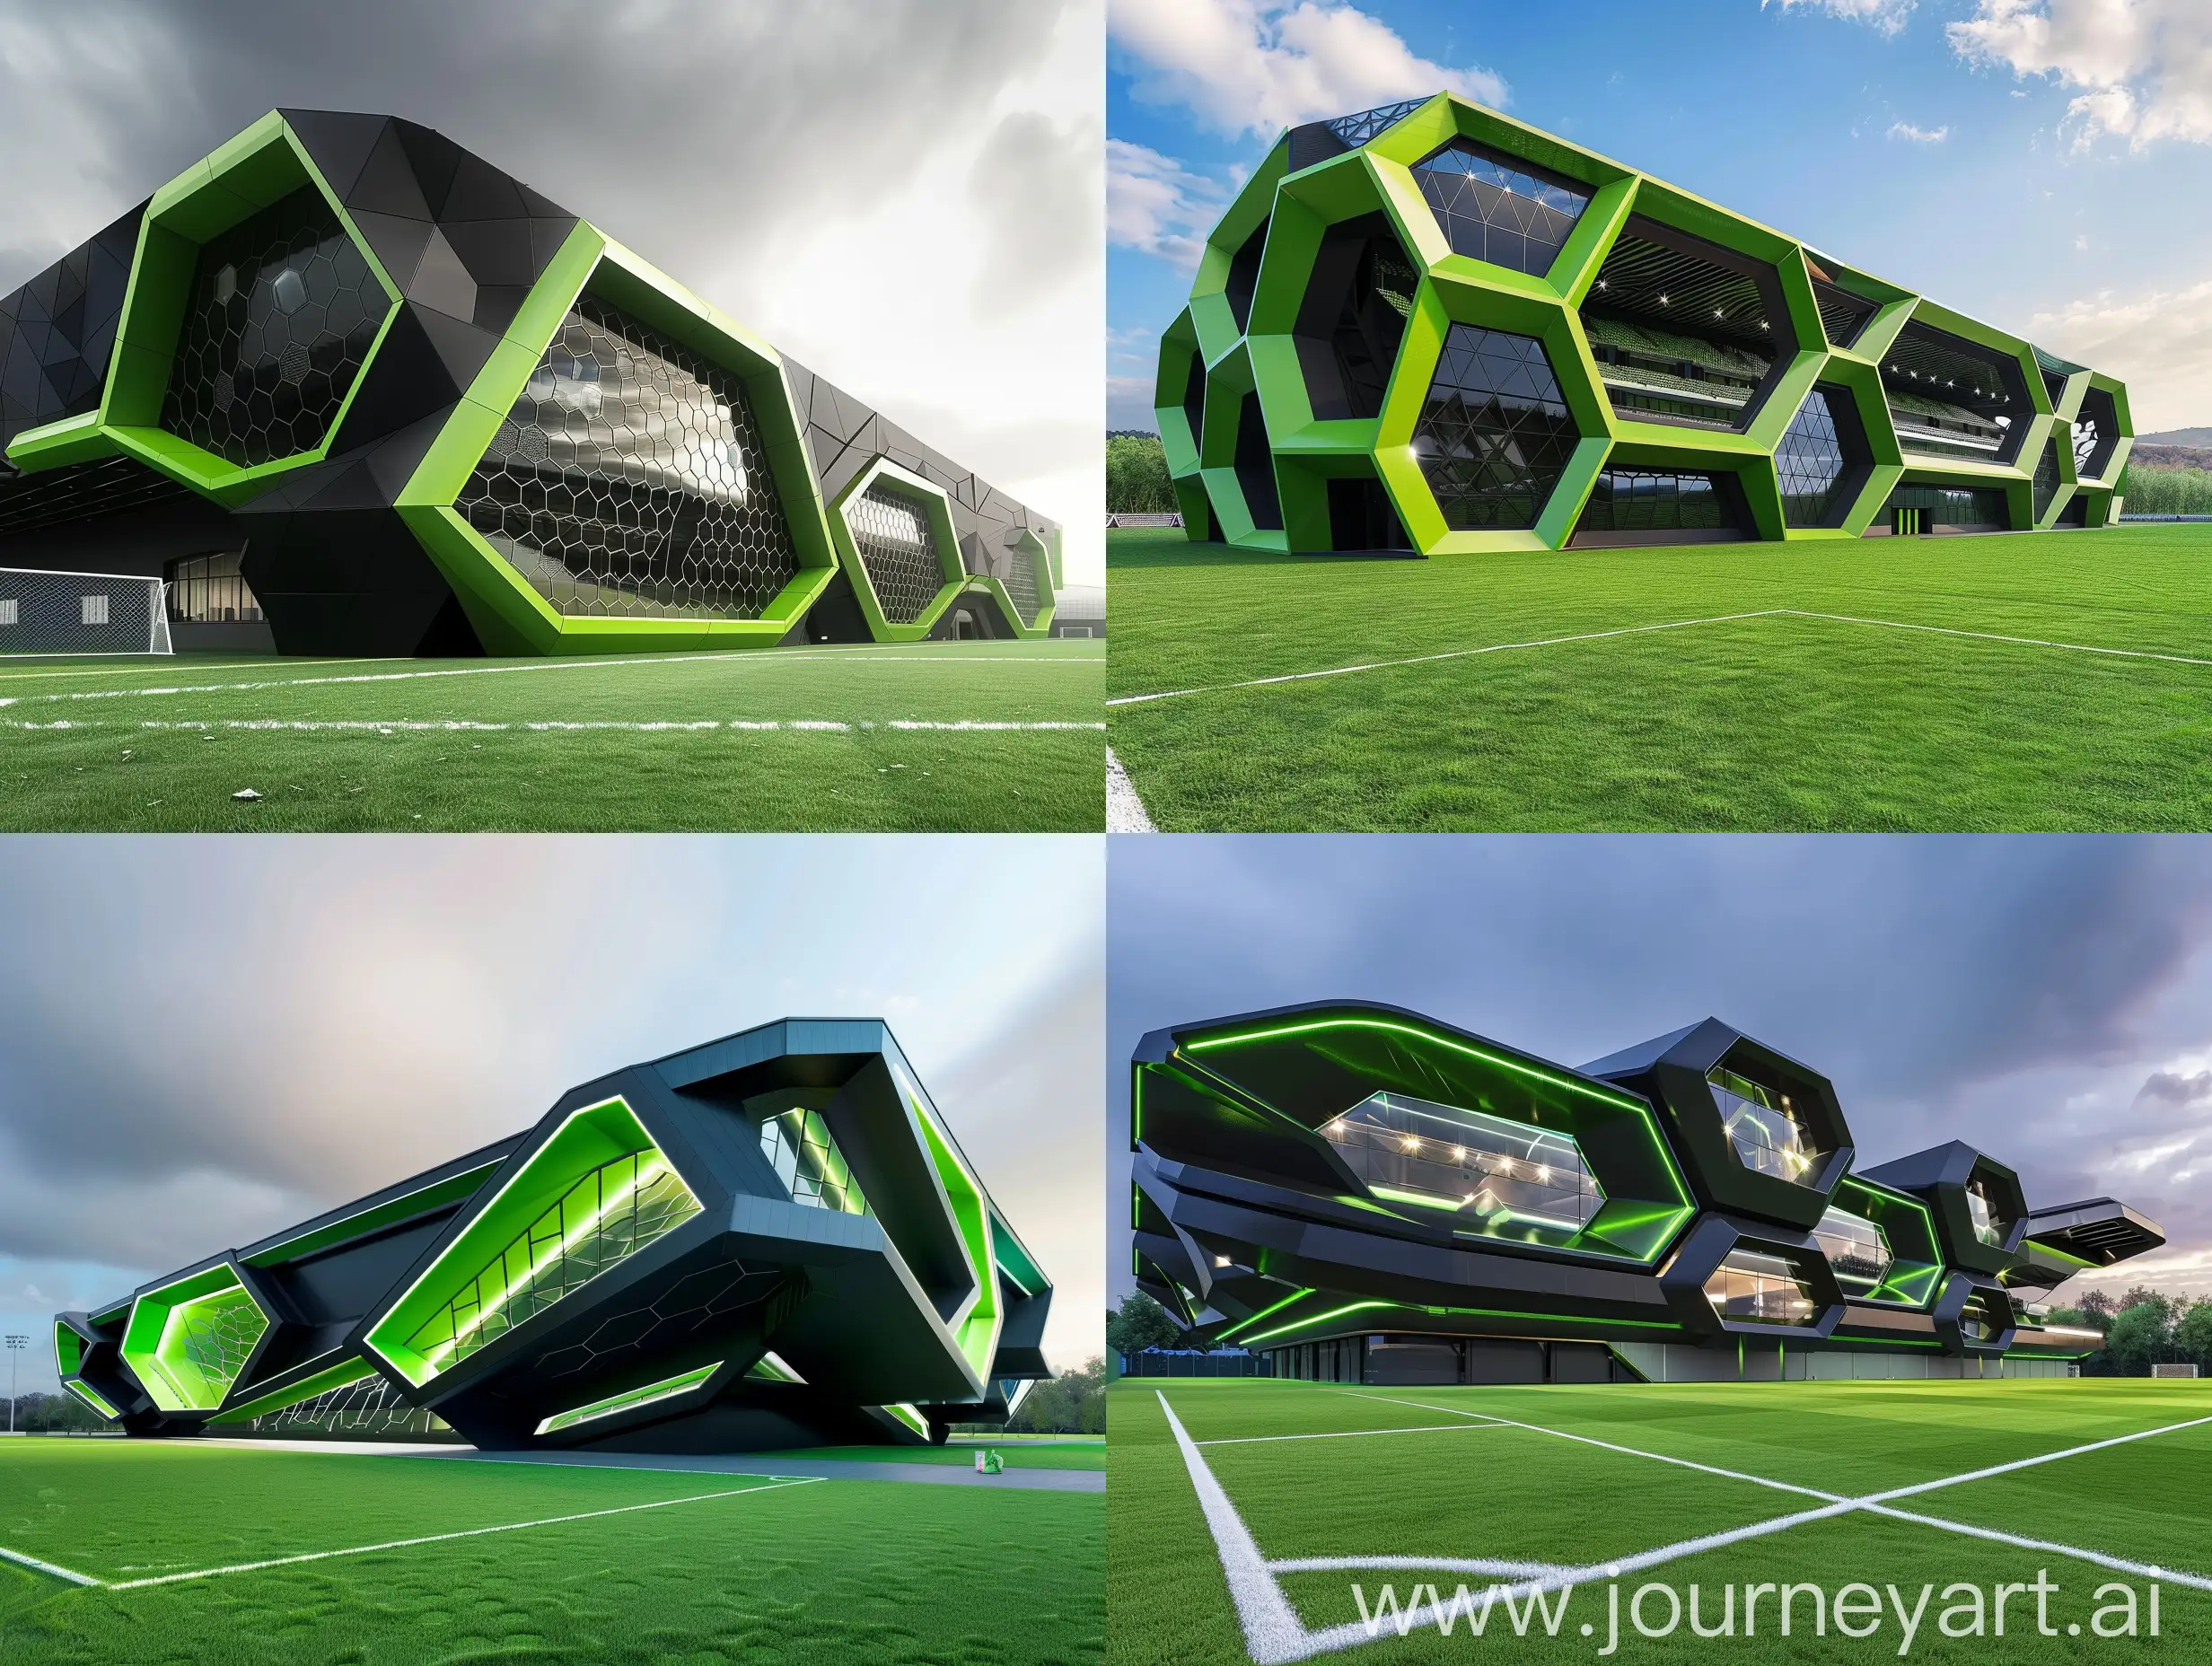 Modern-Hexagonal-Stadium-Soccer-Field-with-Green-and-Black-Theme